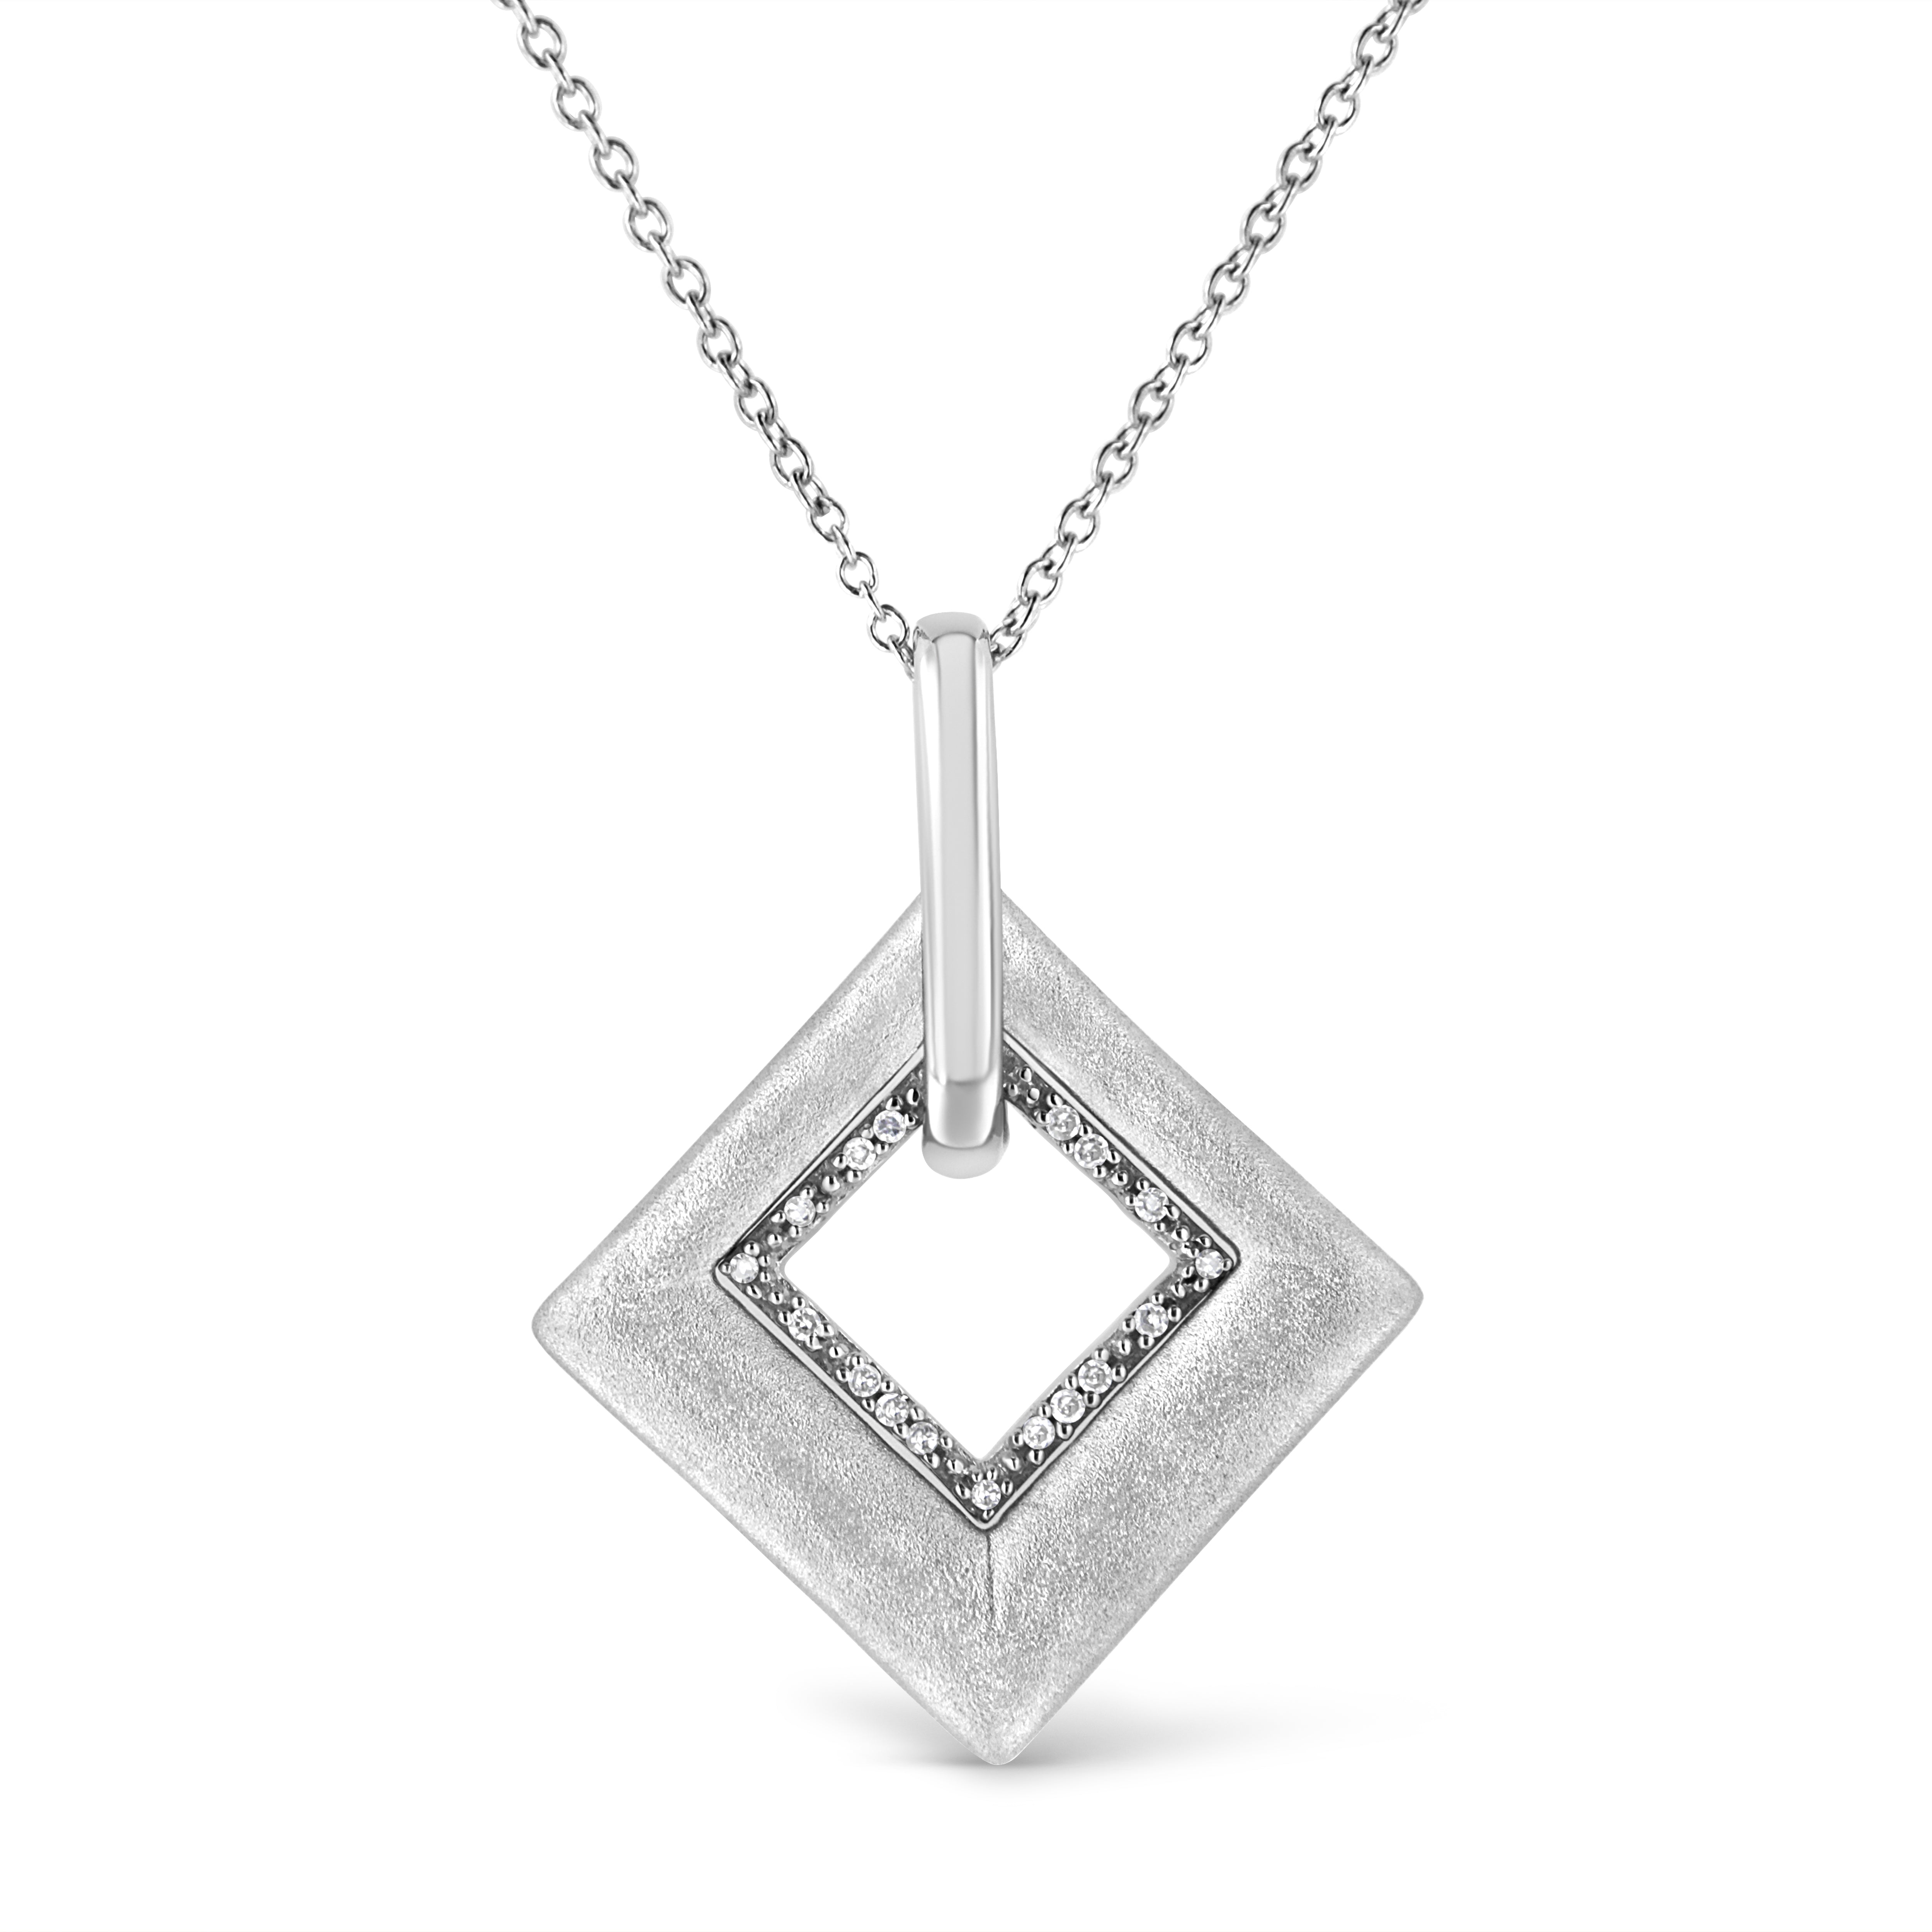 .925 Sterling Silver Pave-Set Diamond Accent Kite Shape 18" Pendant Necklace (I-J Color, I1-I2 Clarity)-1